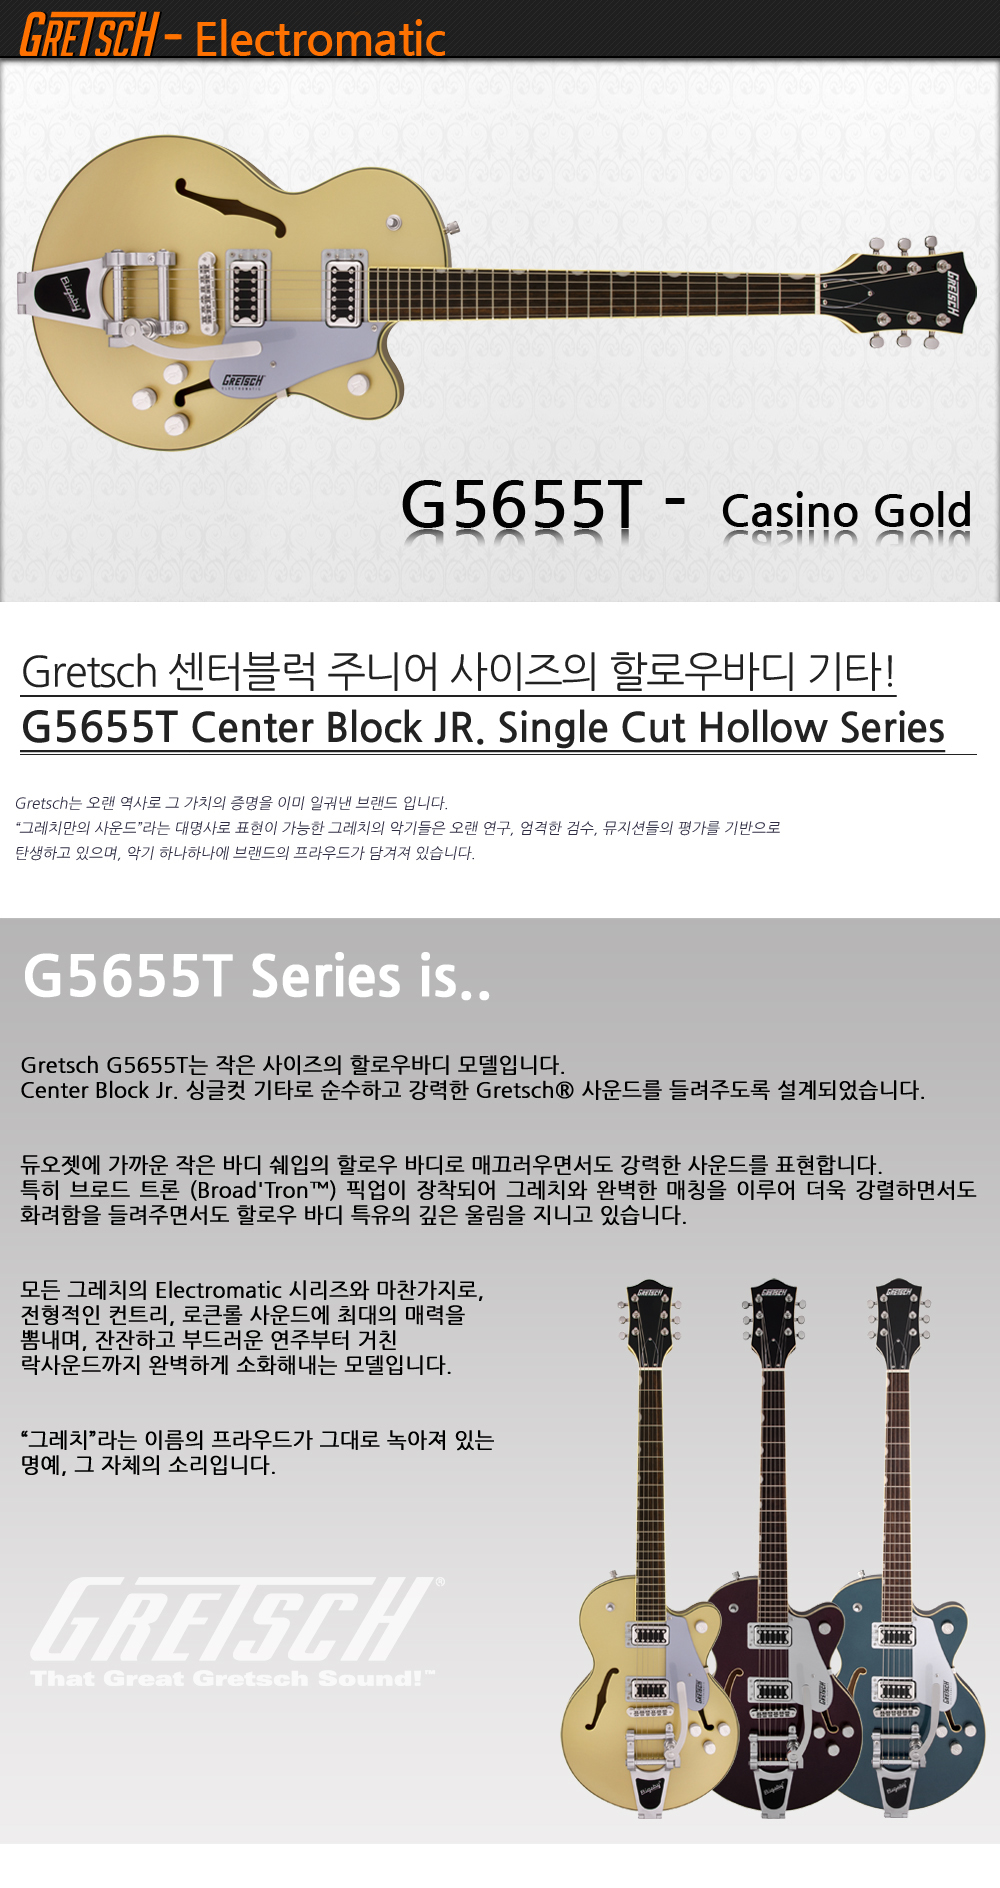 Gretsch-G5655T-CasinoGold_1_103855.jpg